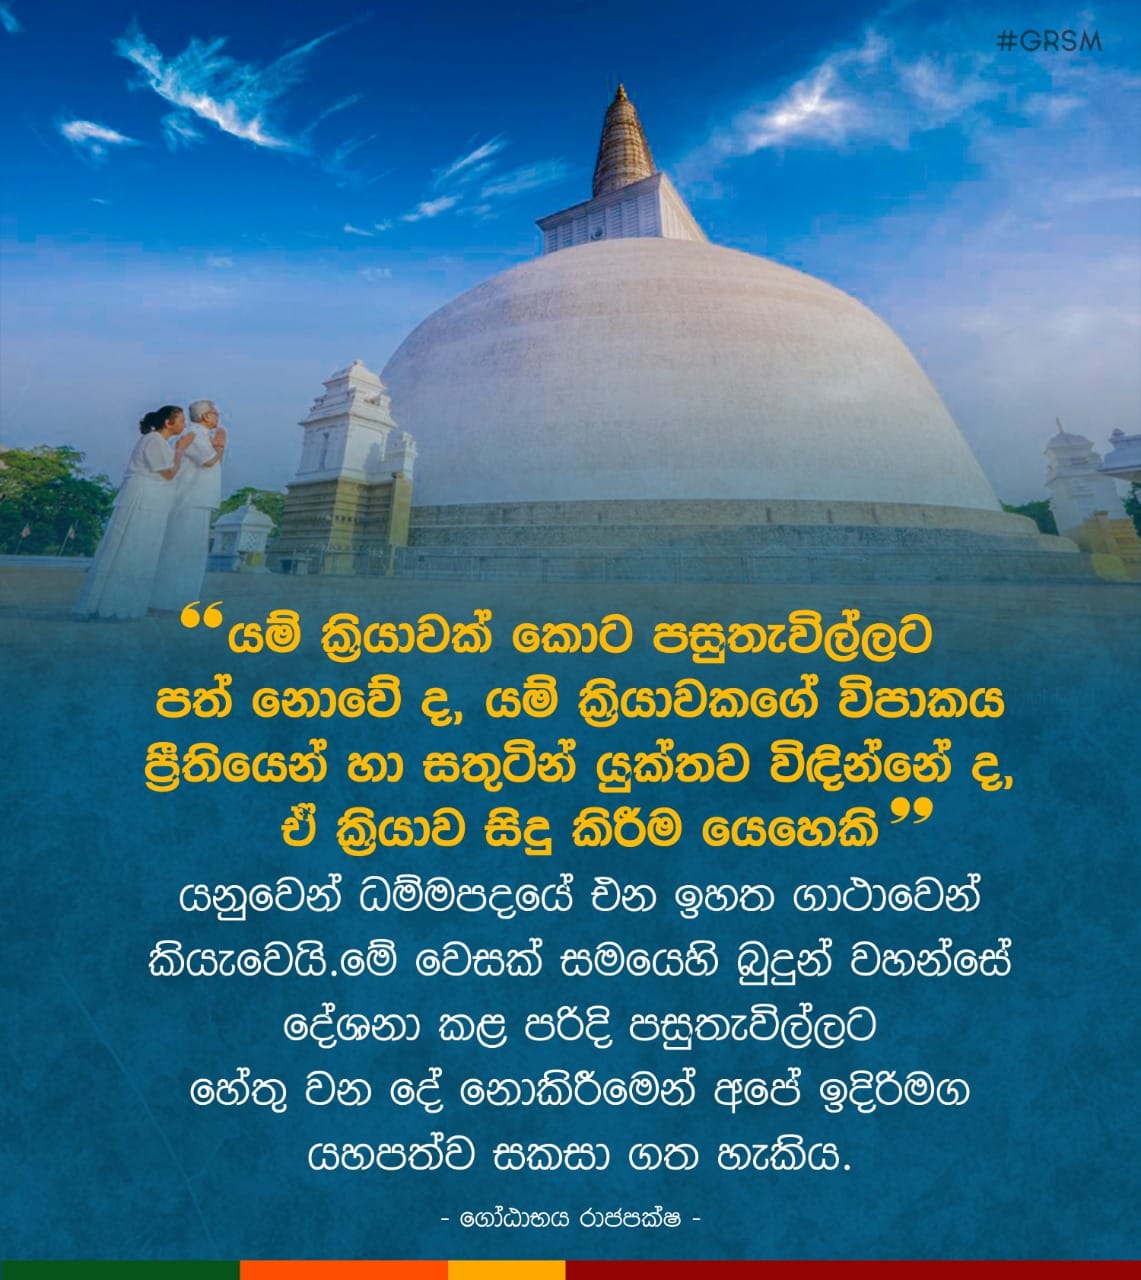 Vesak Day Message by H.E Gotabaya Rajapaksa, President of Sri Lanka.